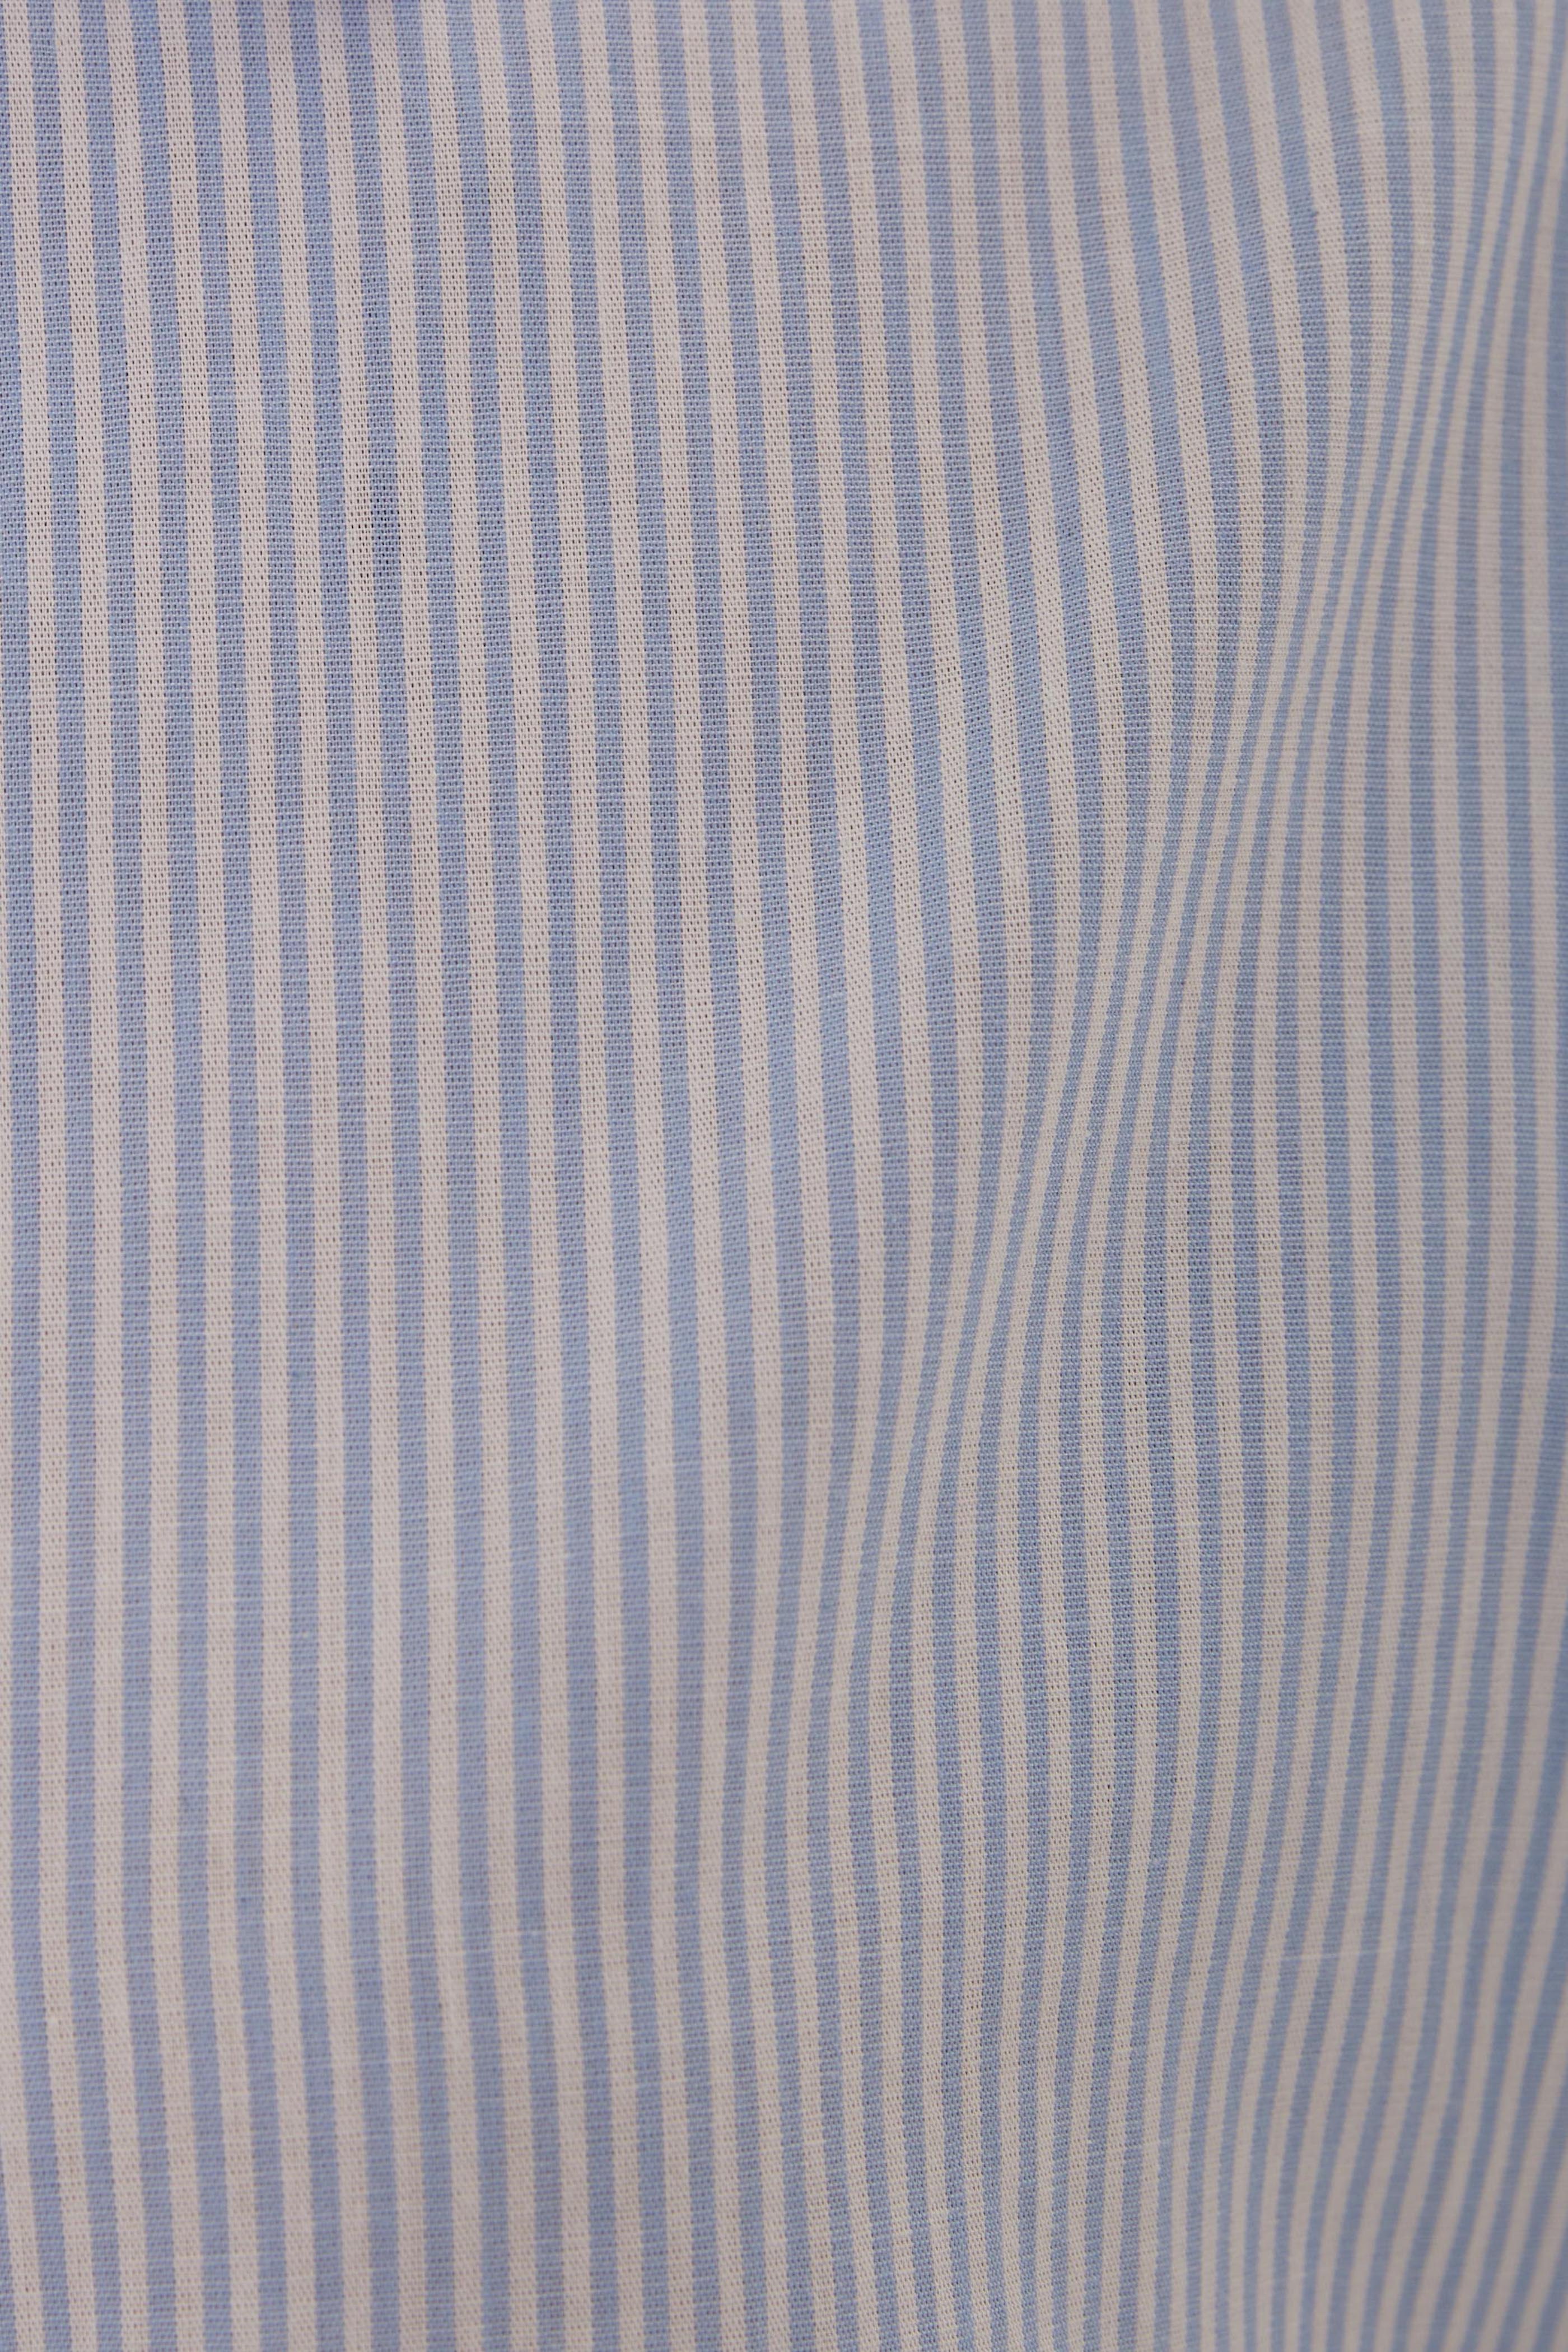 STUDIOS Shirt in Stripe Blue